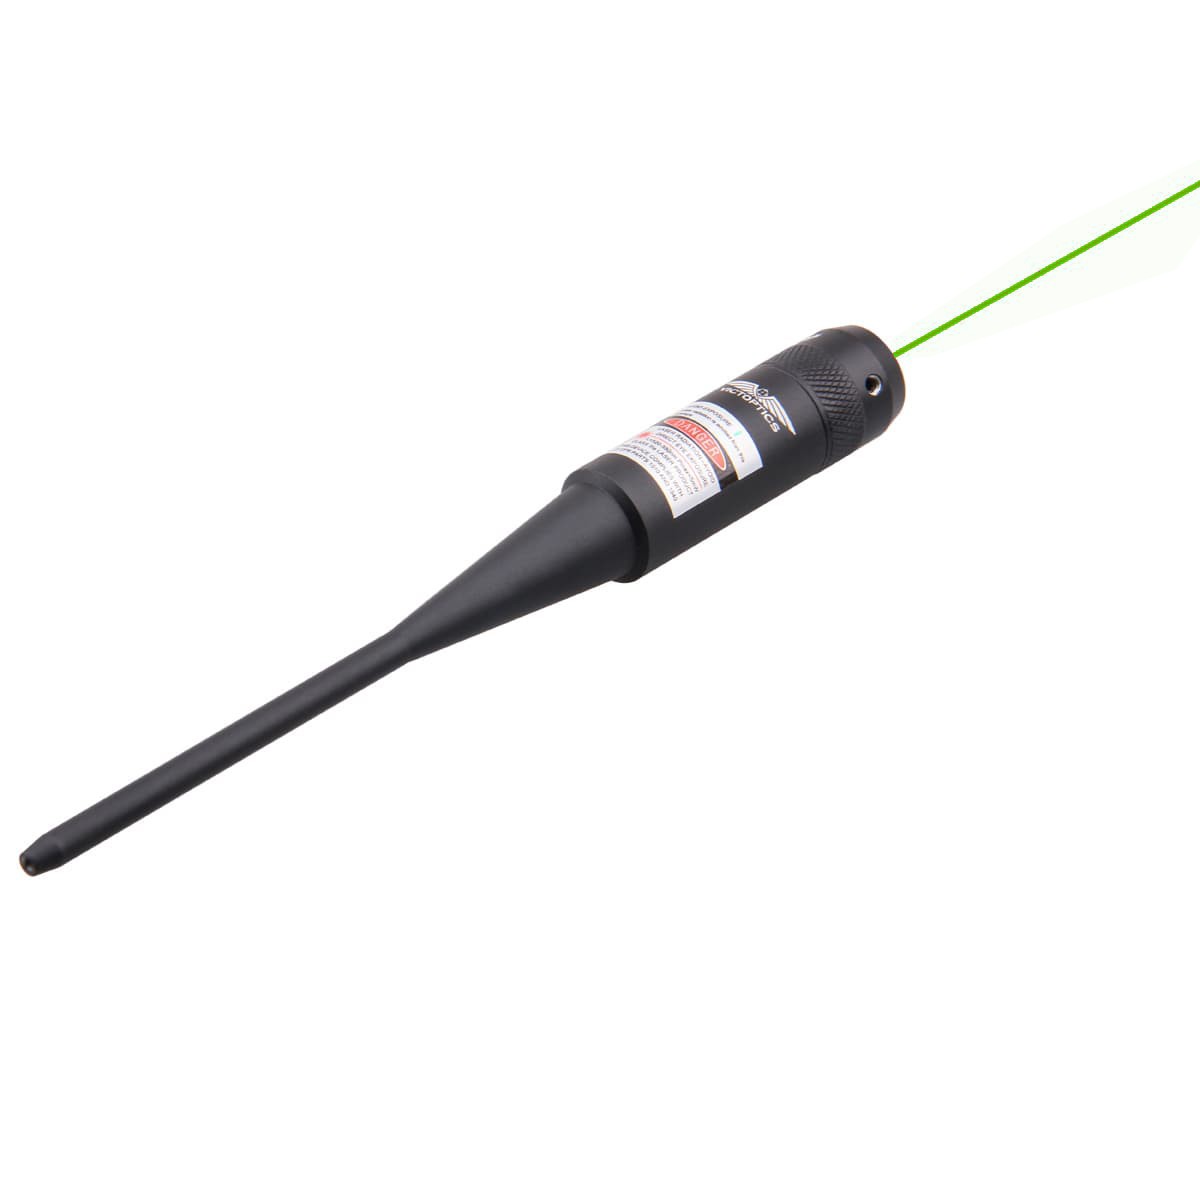 Victoptics Pivot Universal Green Laser